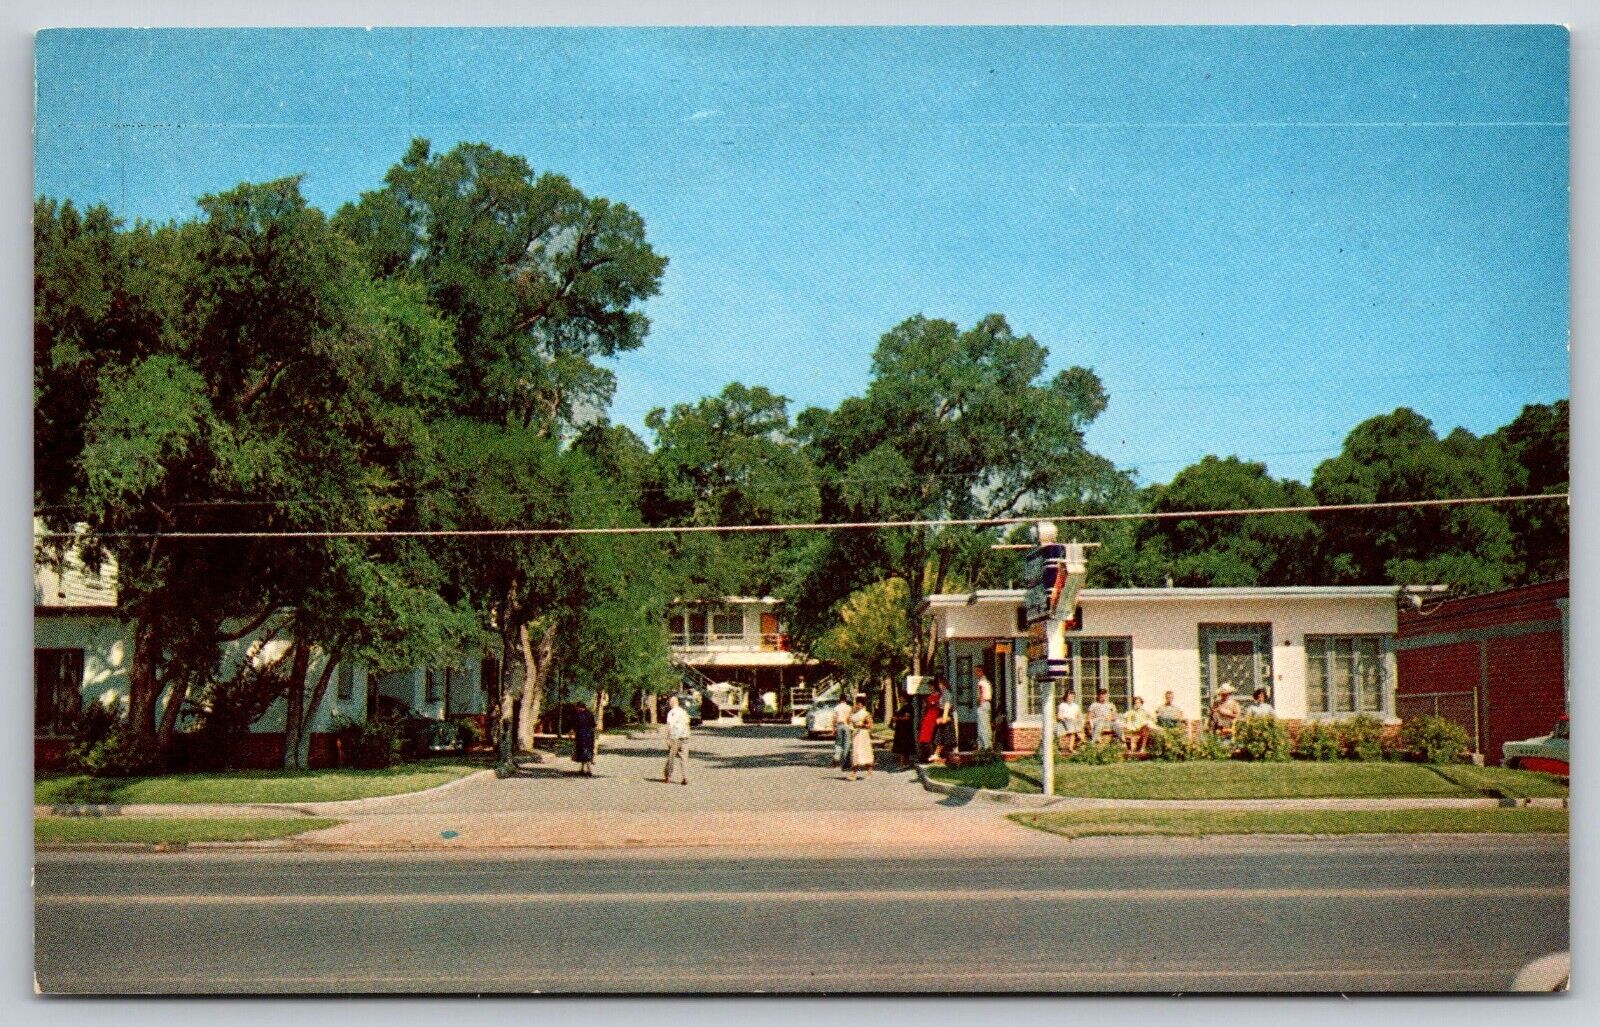 Aero Holiday Motel San Antonio TX Vintage Card